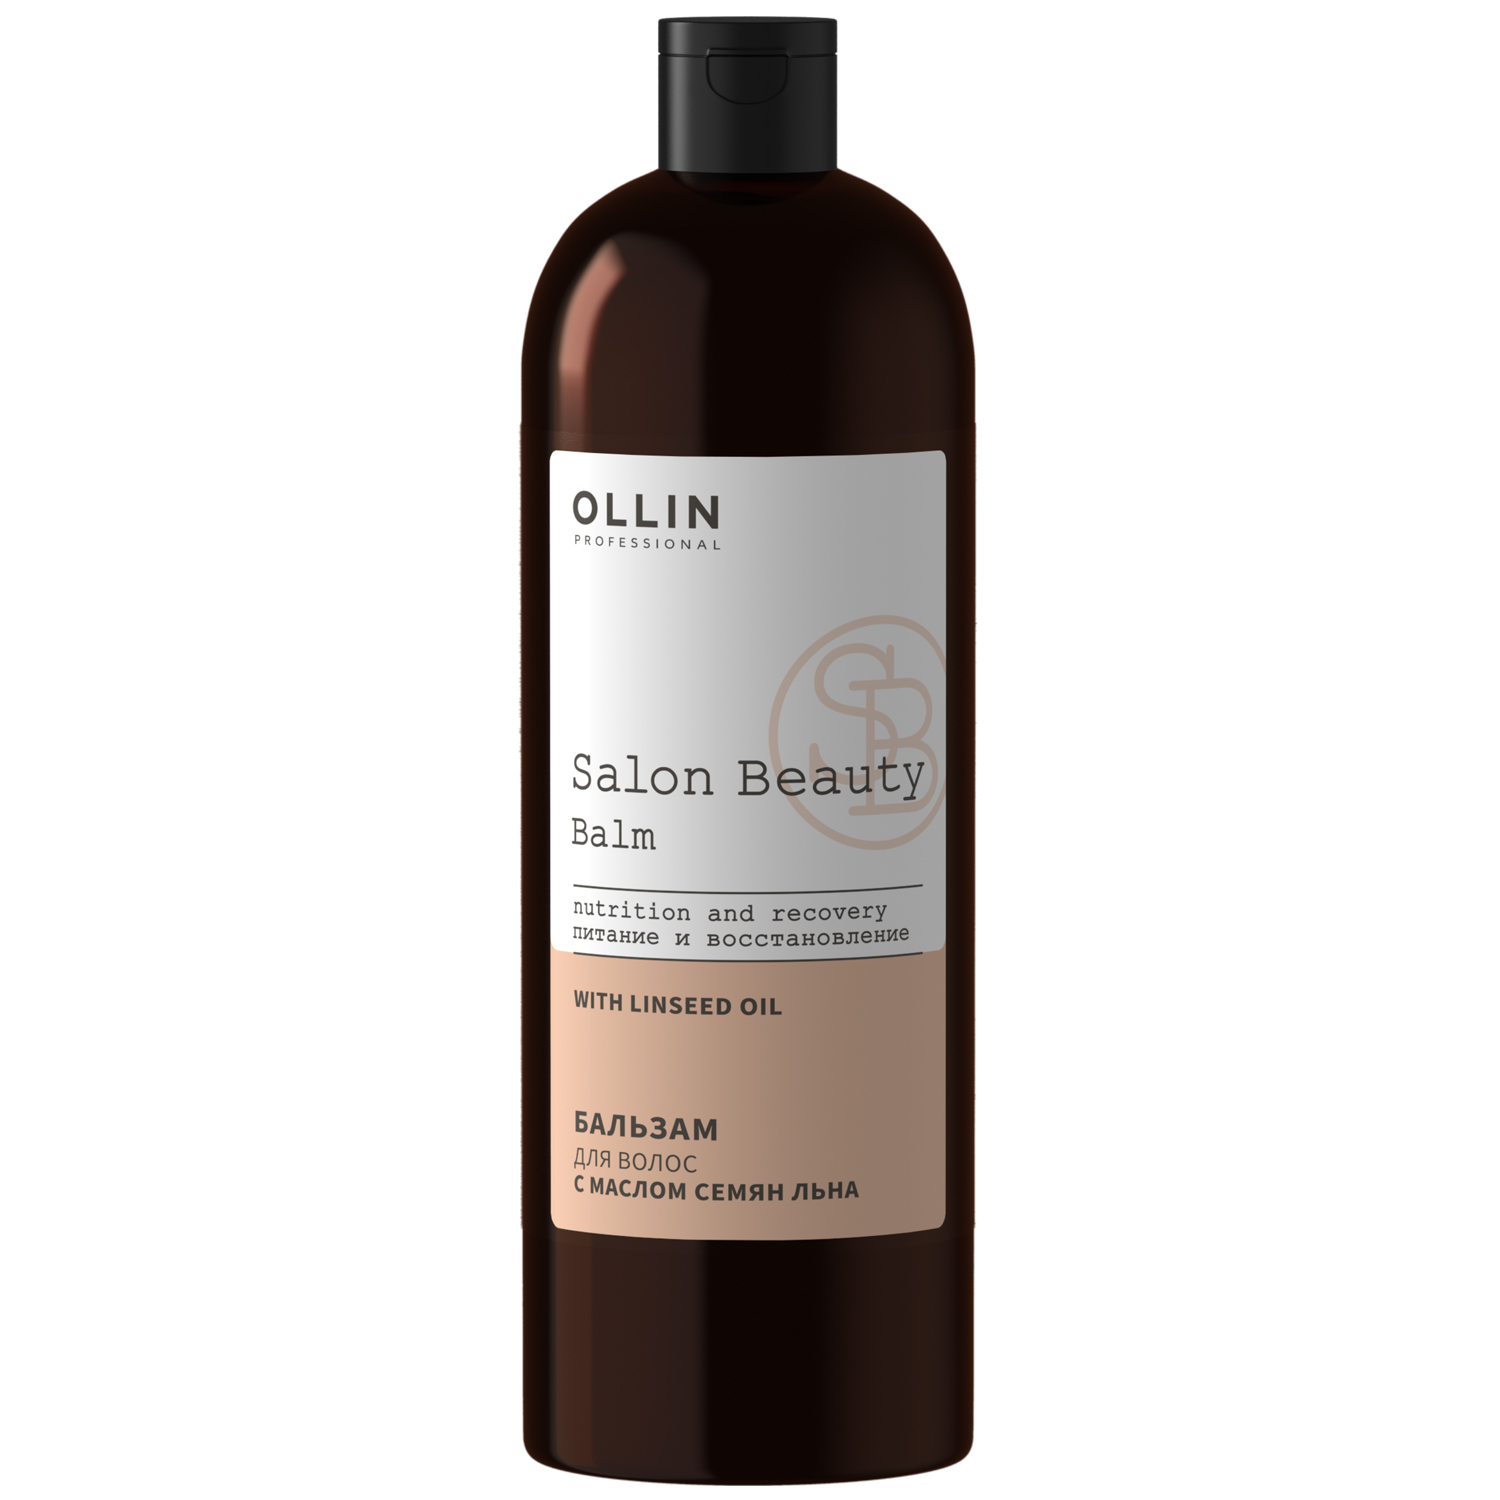 Ollin Professional Бальзам для волос с маслом семян льна, 1000 мл (Ollin Professional, Salon Beauty)